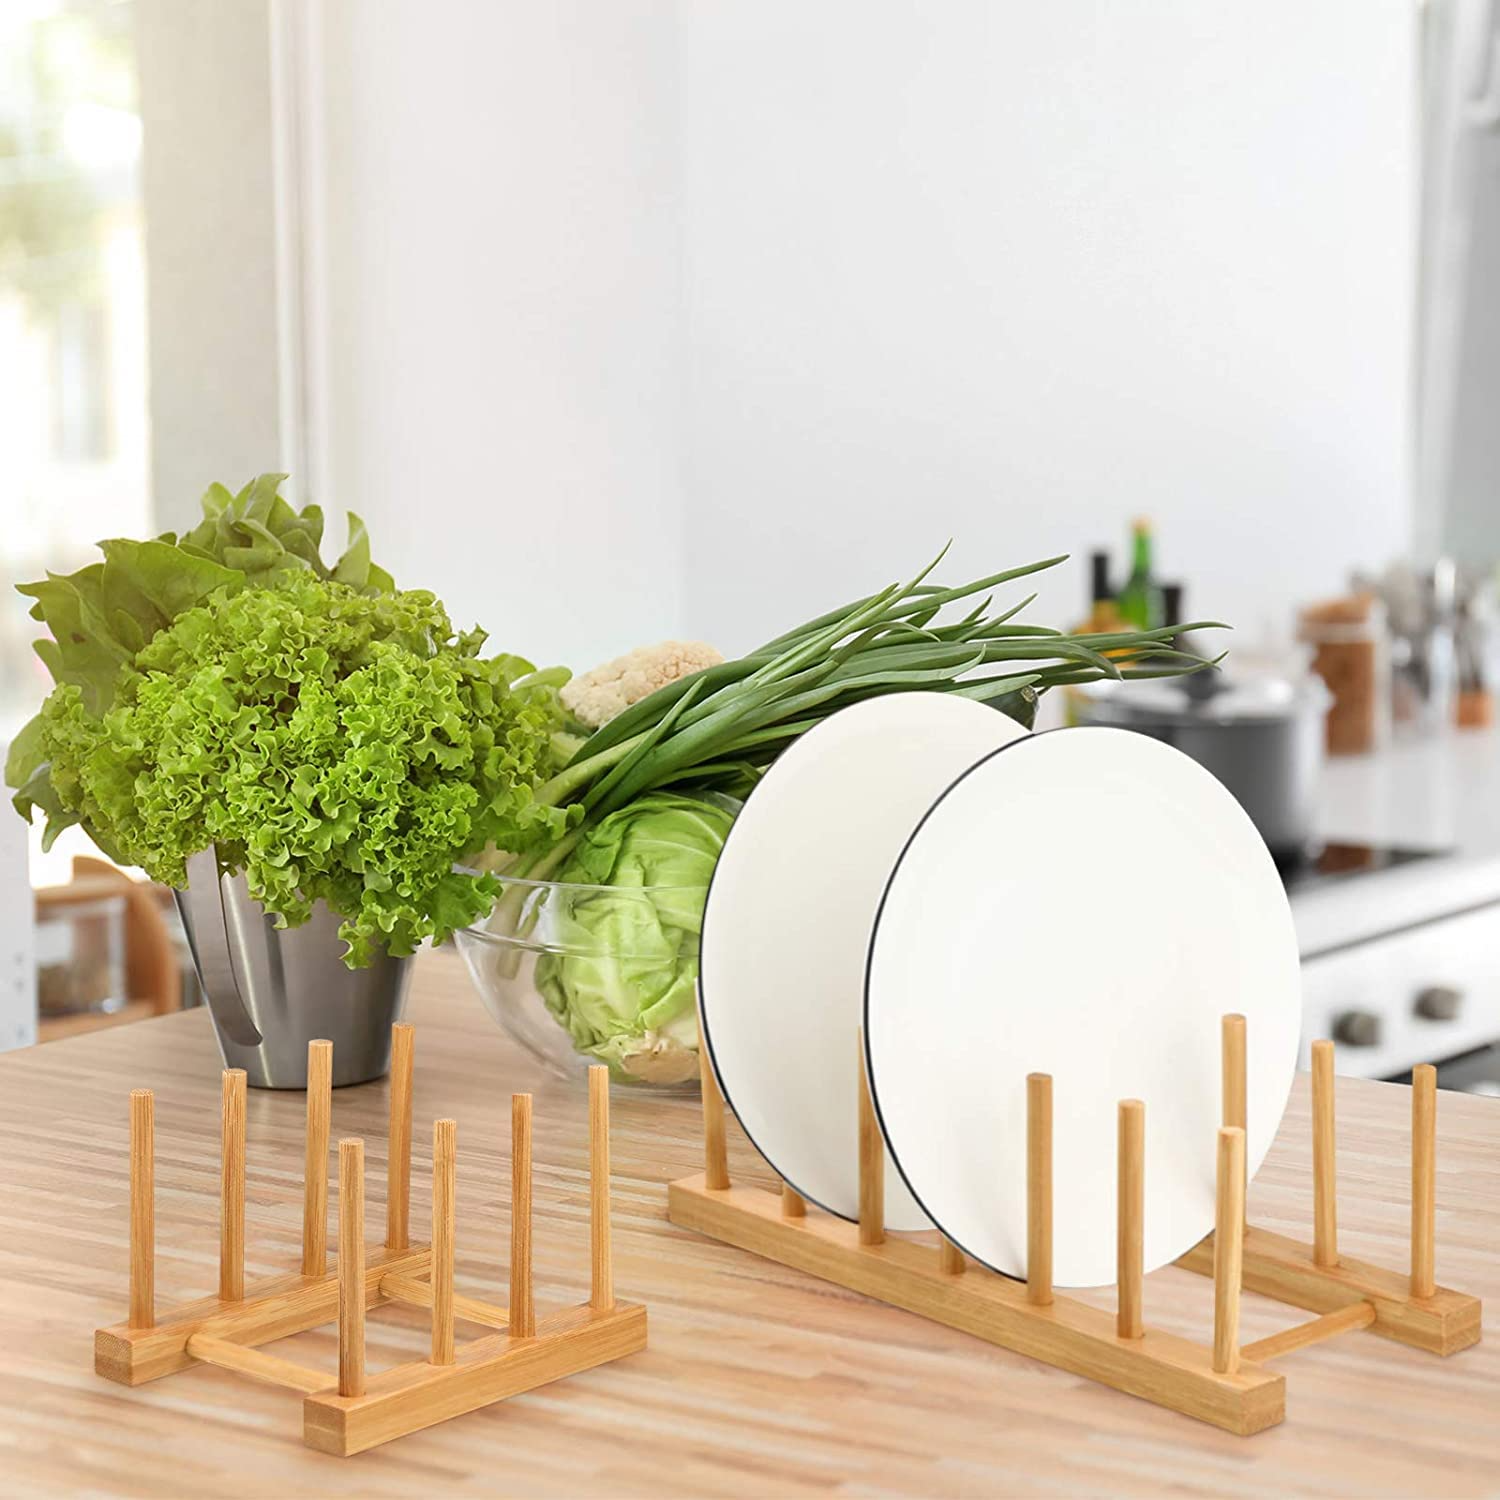 Bamboo Wooden Dish Rack – VVW DESIGN